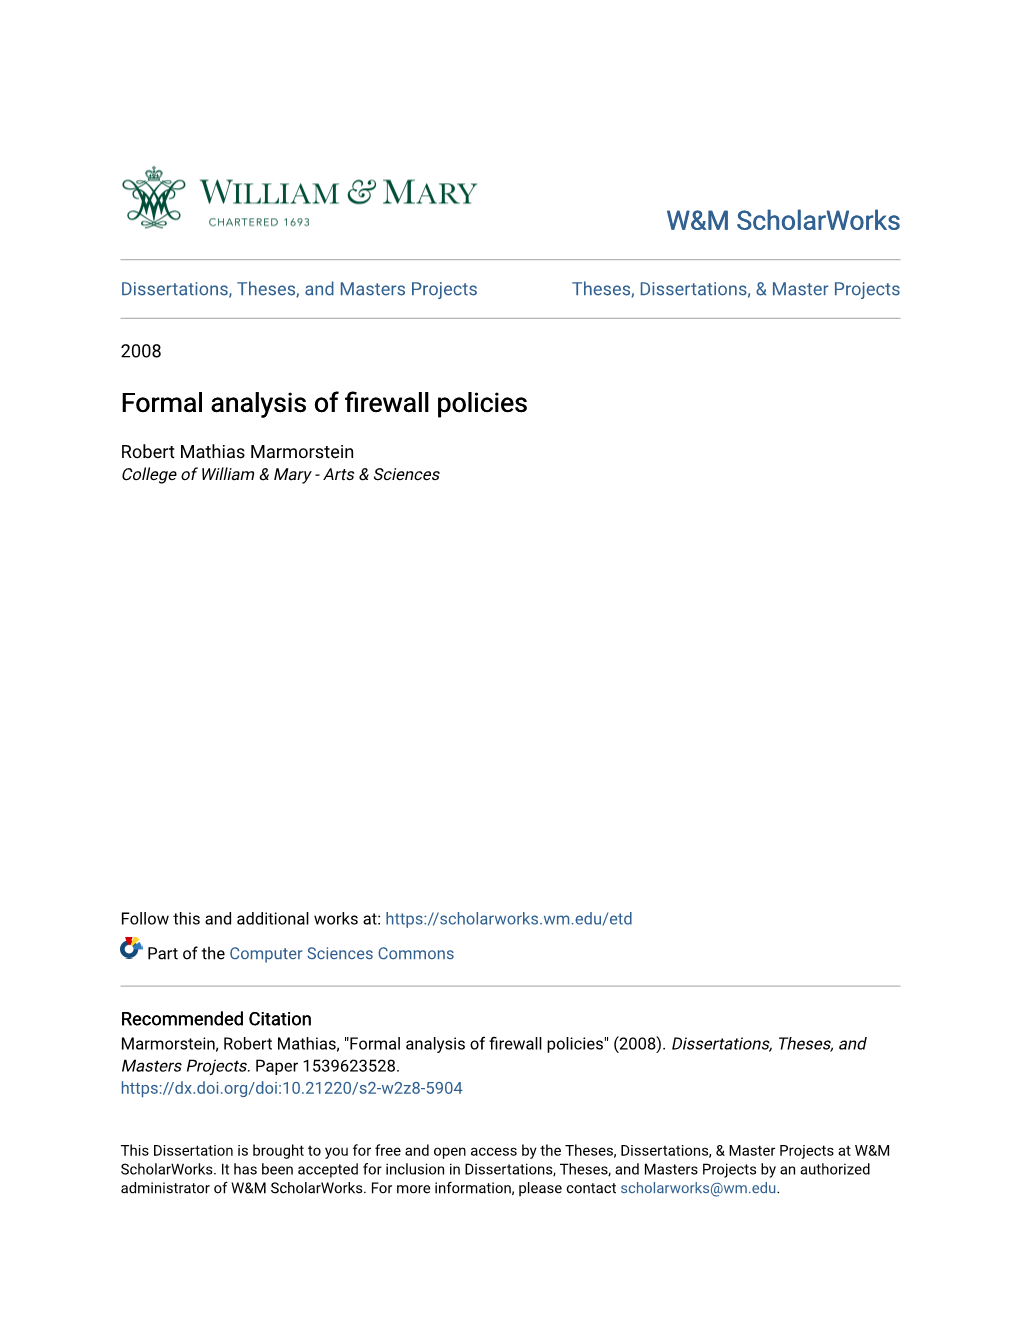 Formal Analysis of Firewall Policies